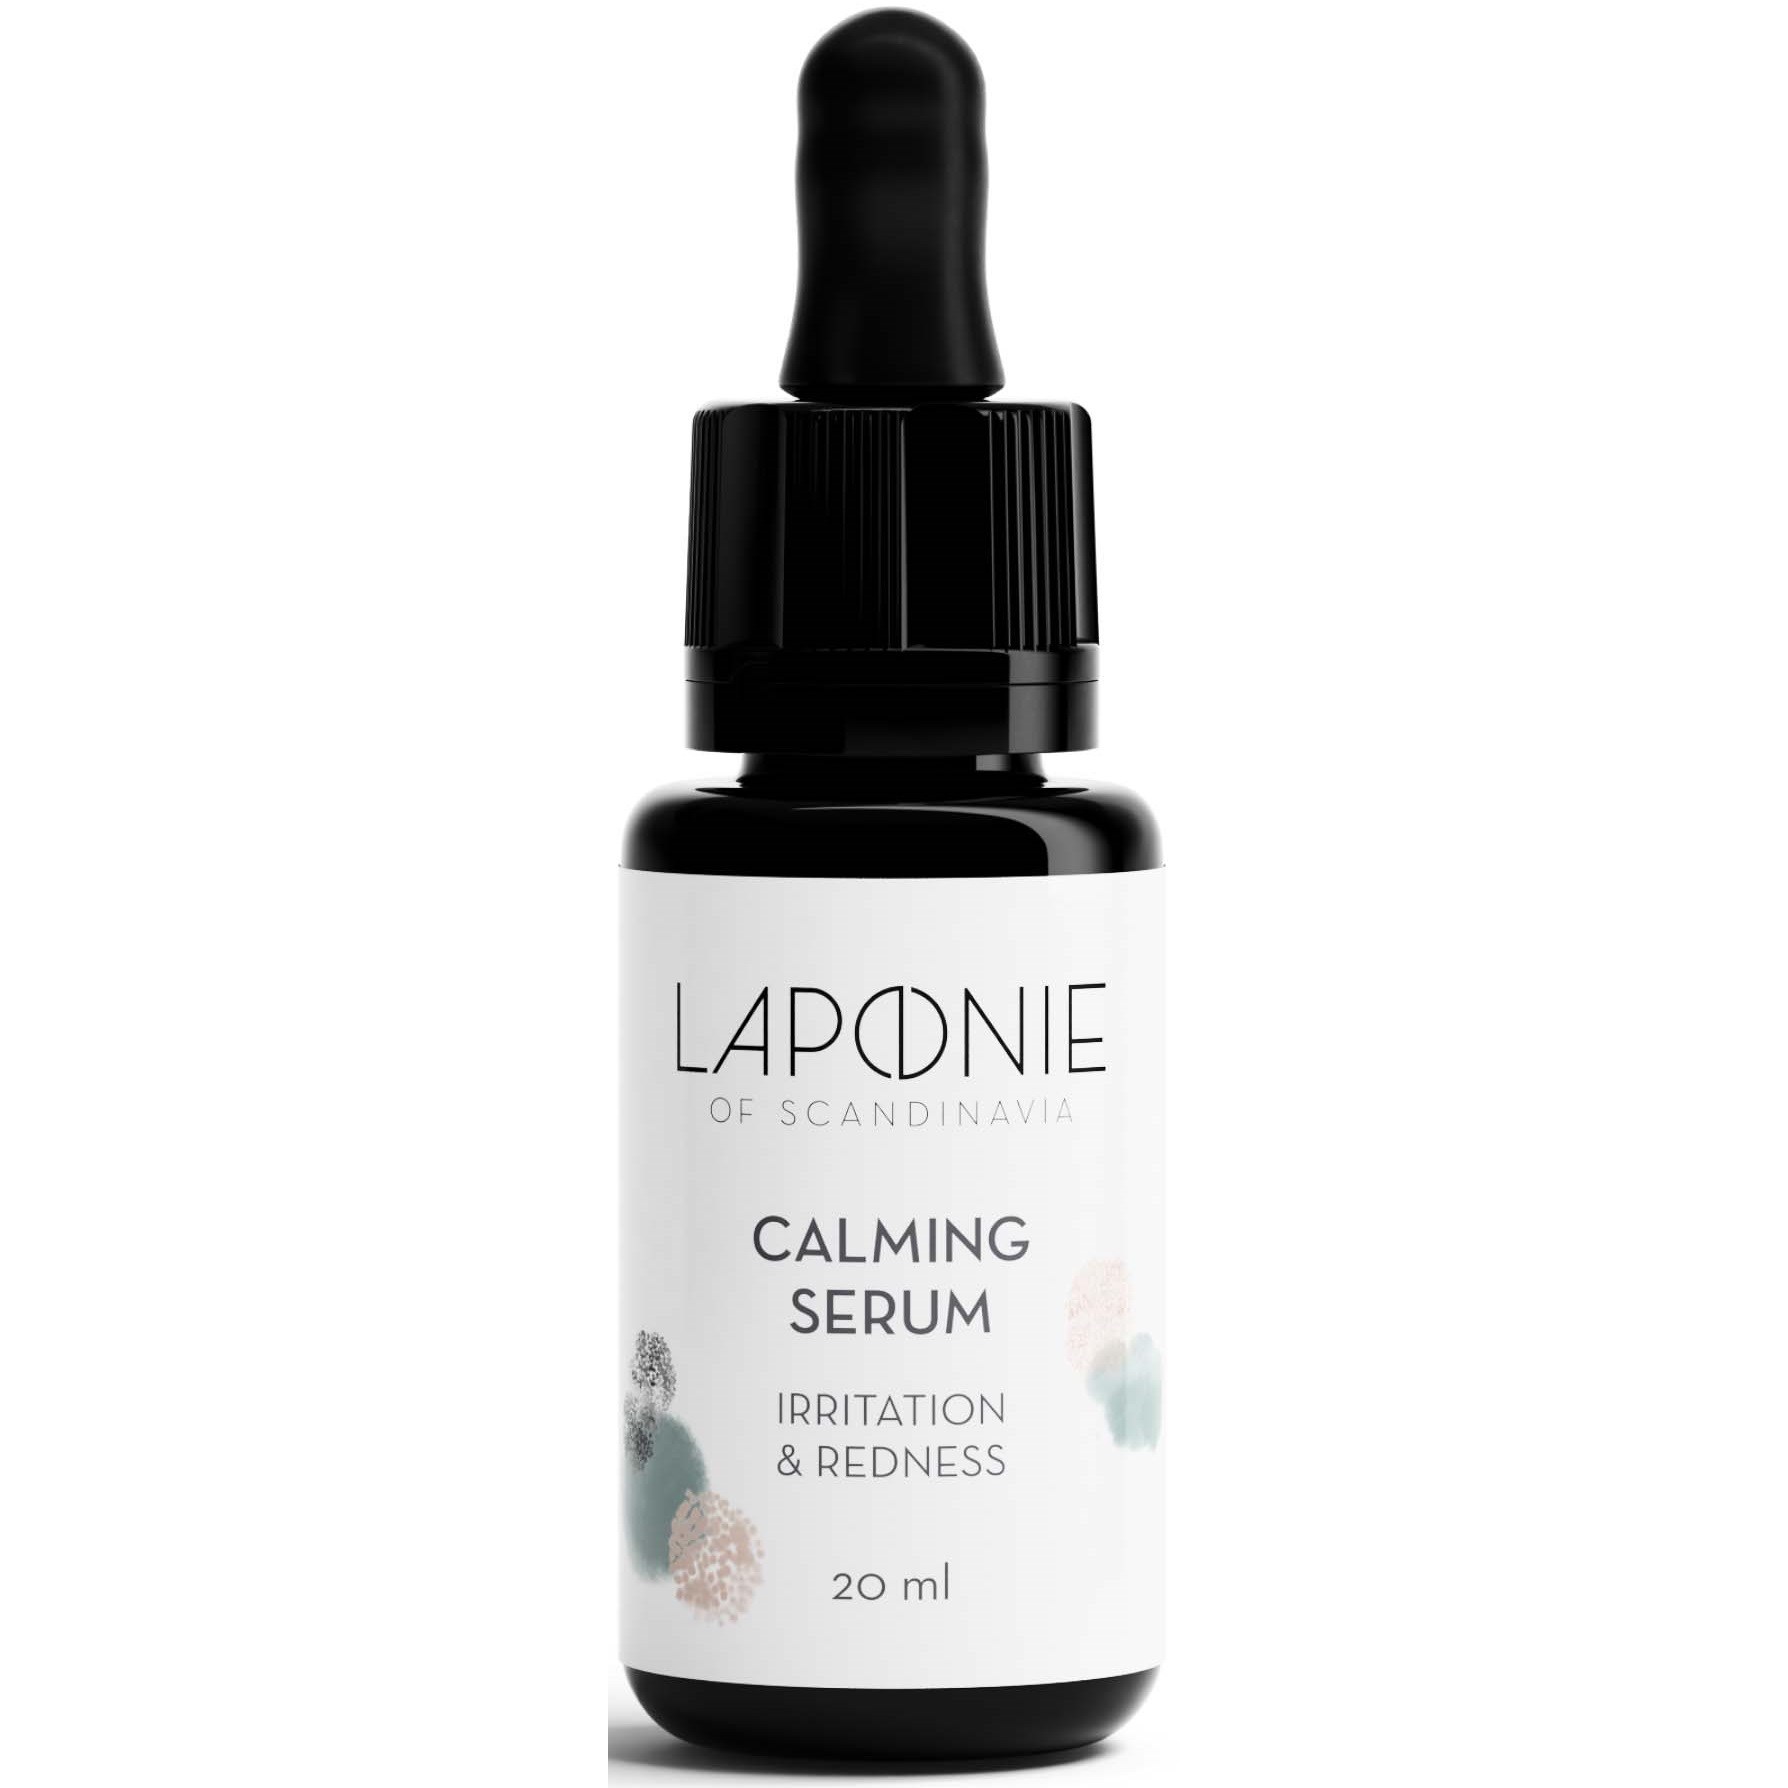 Laponie of Scandinavia Calming Serum 20 ml